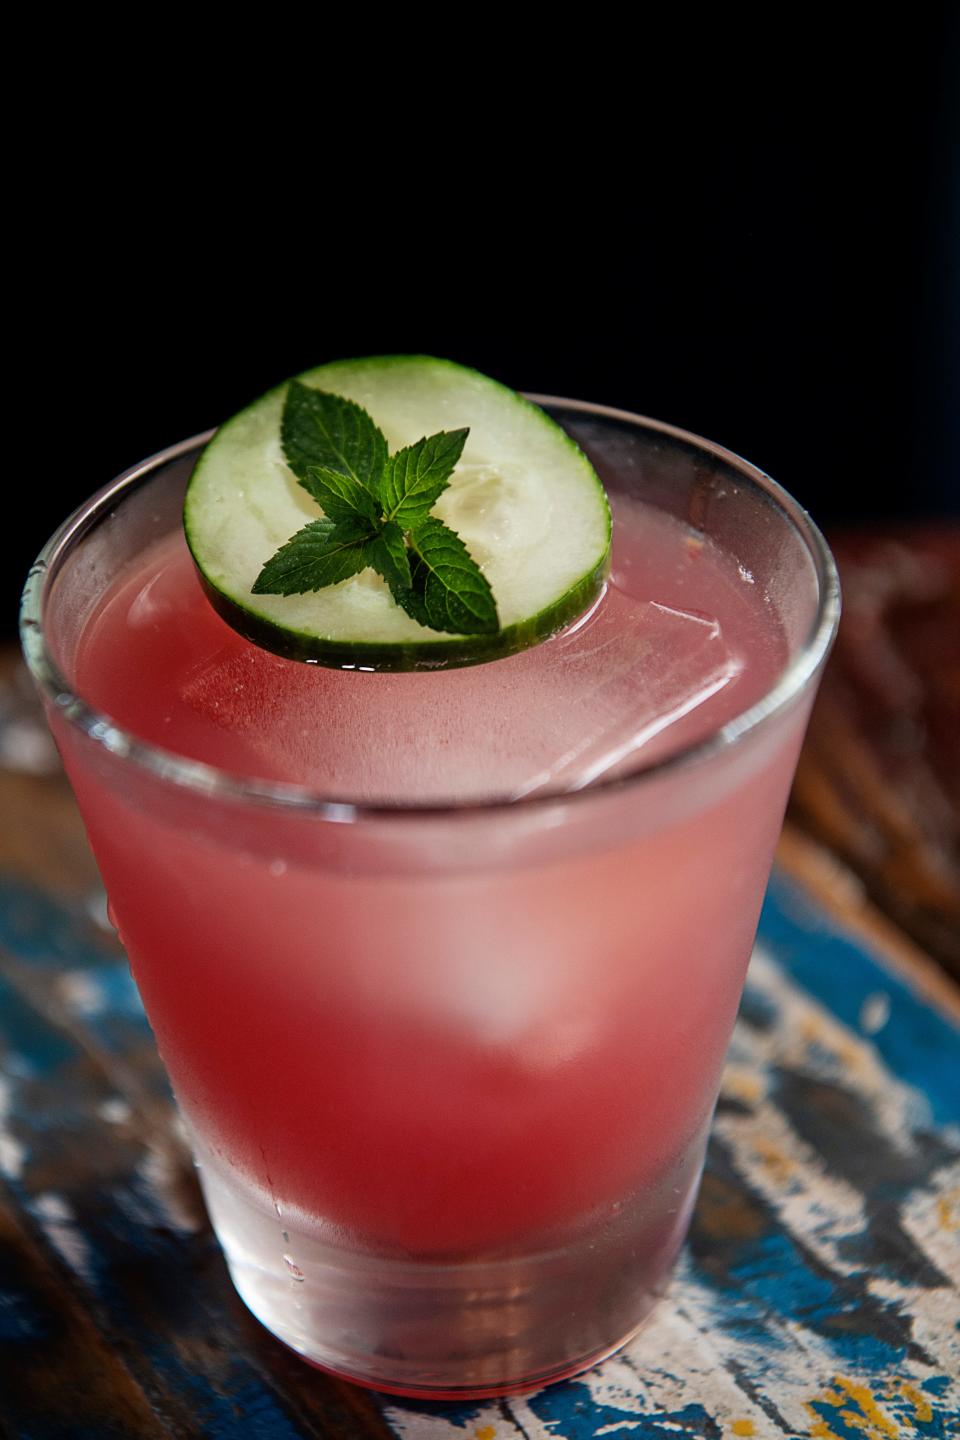 The “Treat Yo’ Self” cocktail from Azalea Bar & Kitchen has cucumber vodka, watermelon puree, cucumber and mint.